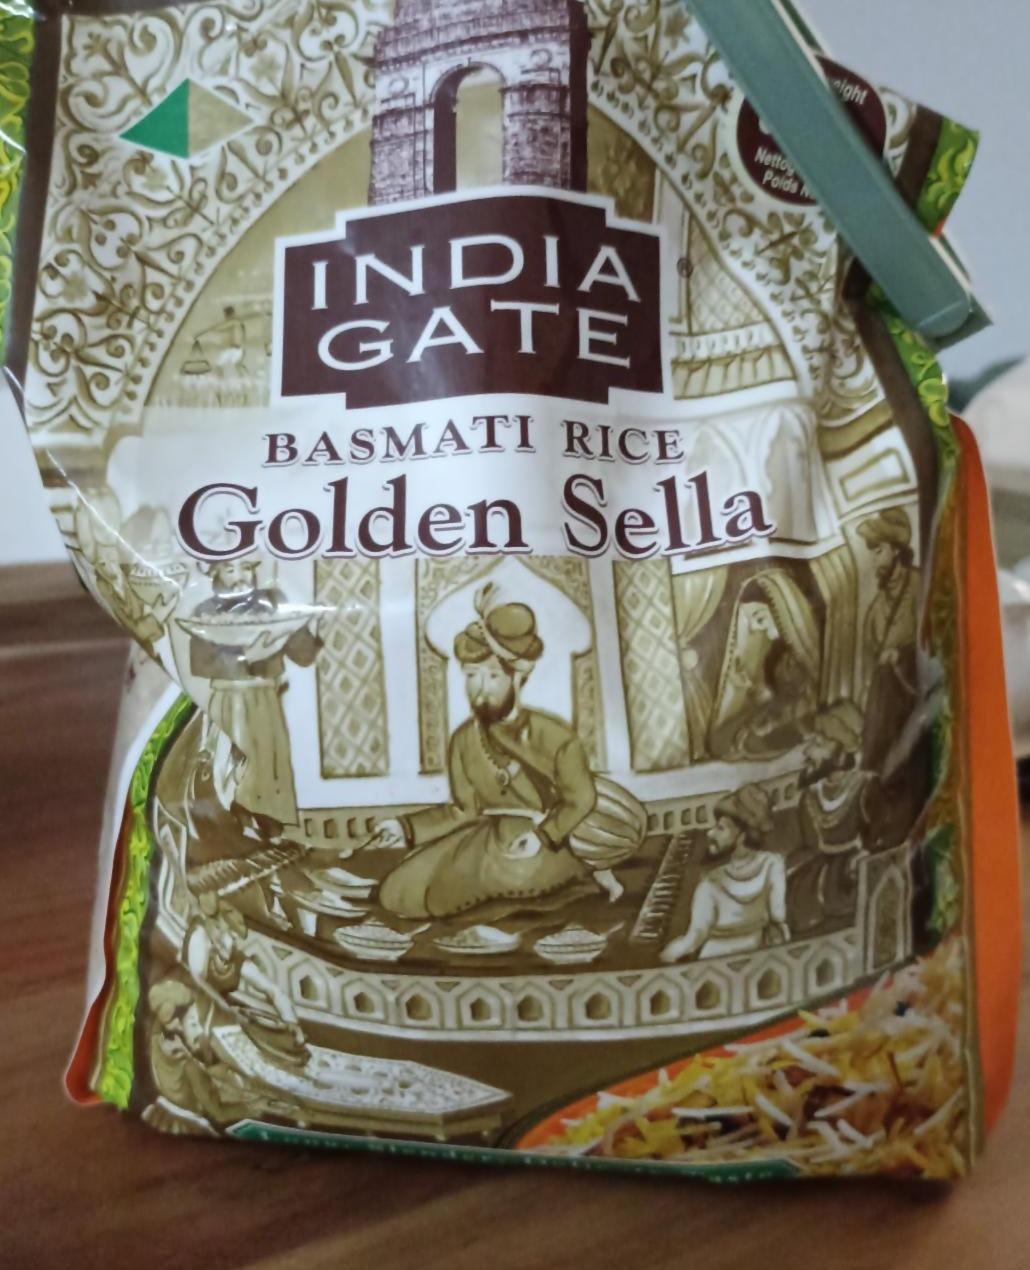 Fotografie - Basmati Rice Golden Sella India Gate